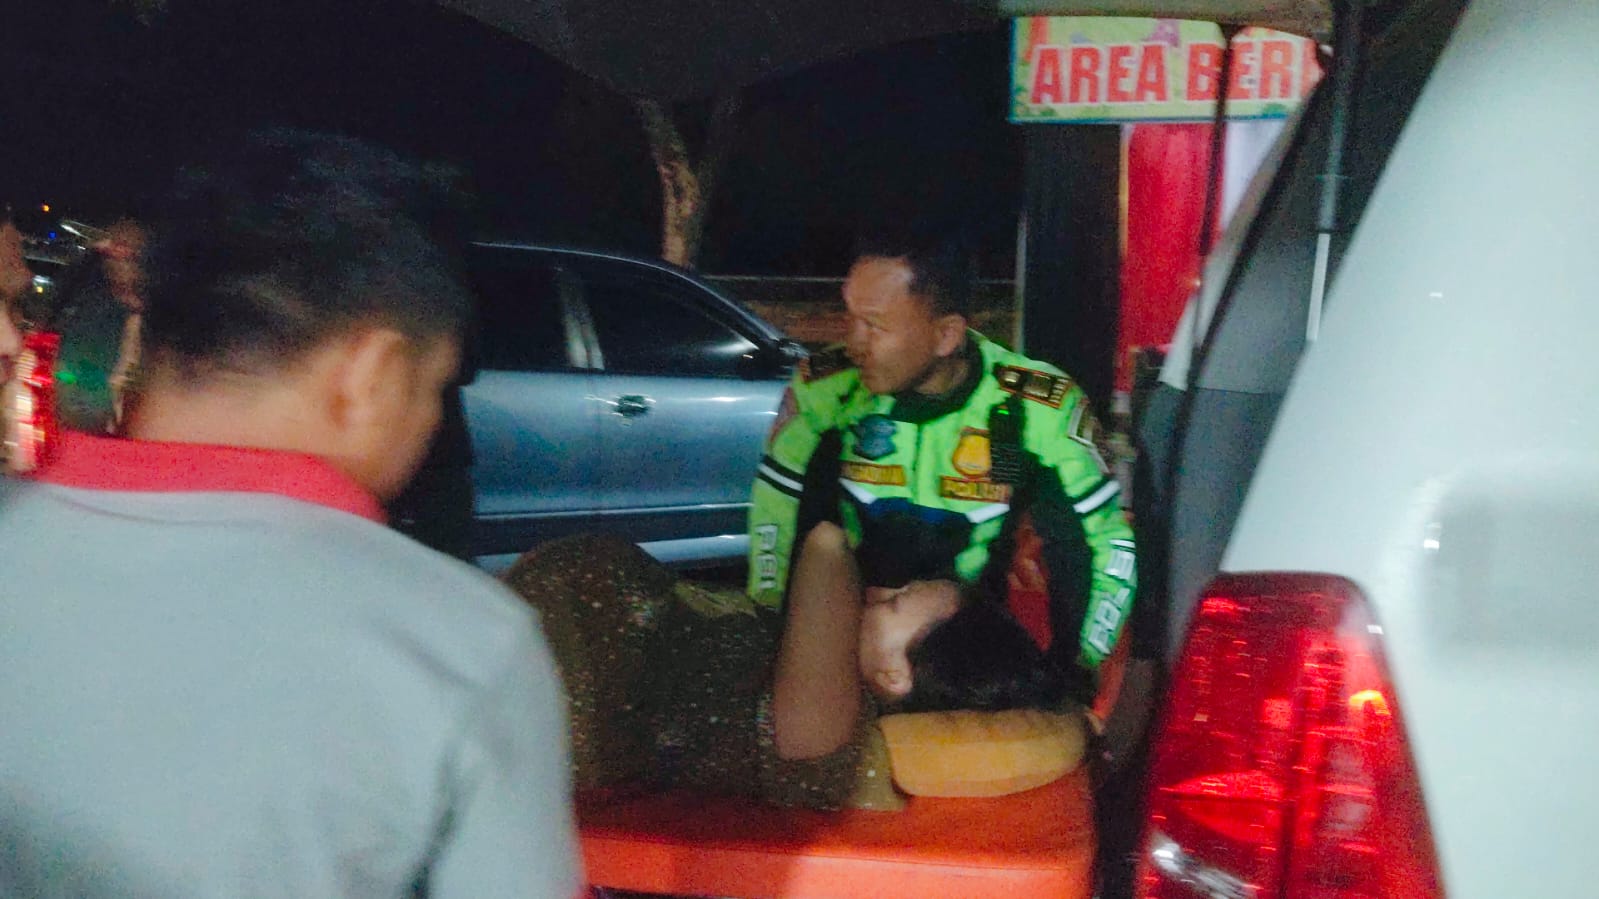 DARURAT! Polisi Evakuasi Pemudik Hendak Melahirkan di Rest Area ke Rumah Sakit